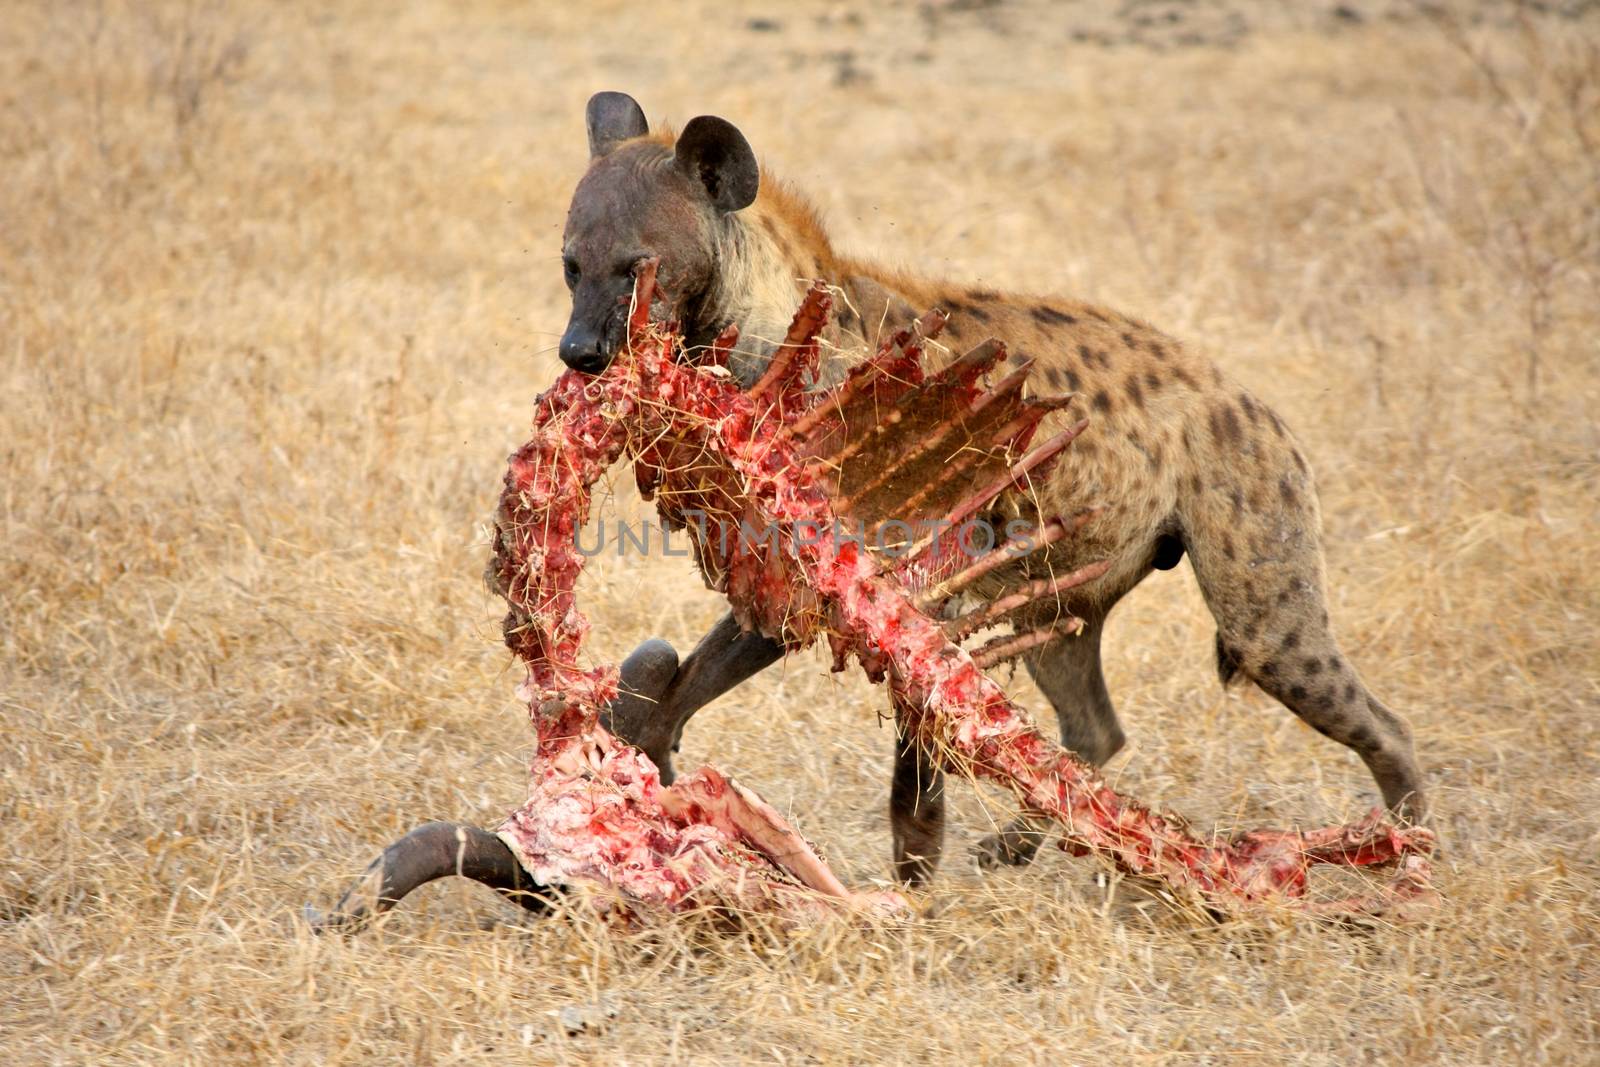 Hyena in national park Tanzania by moizhusein